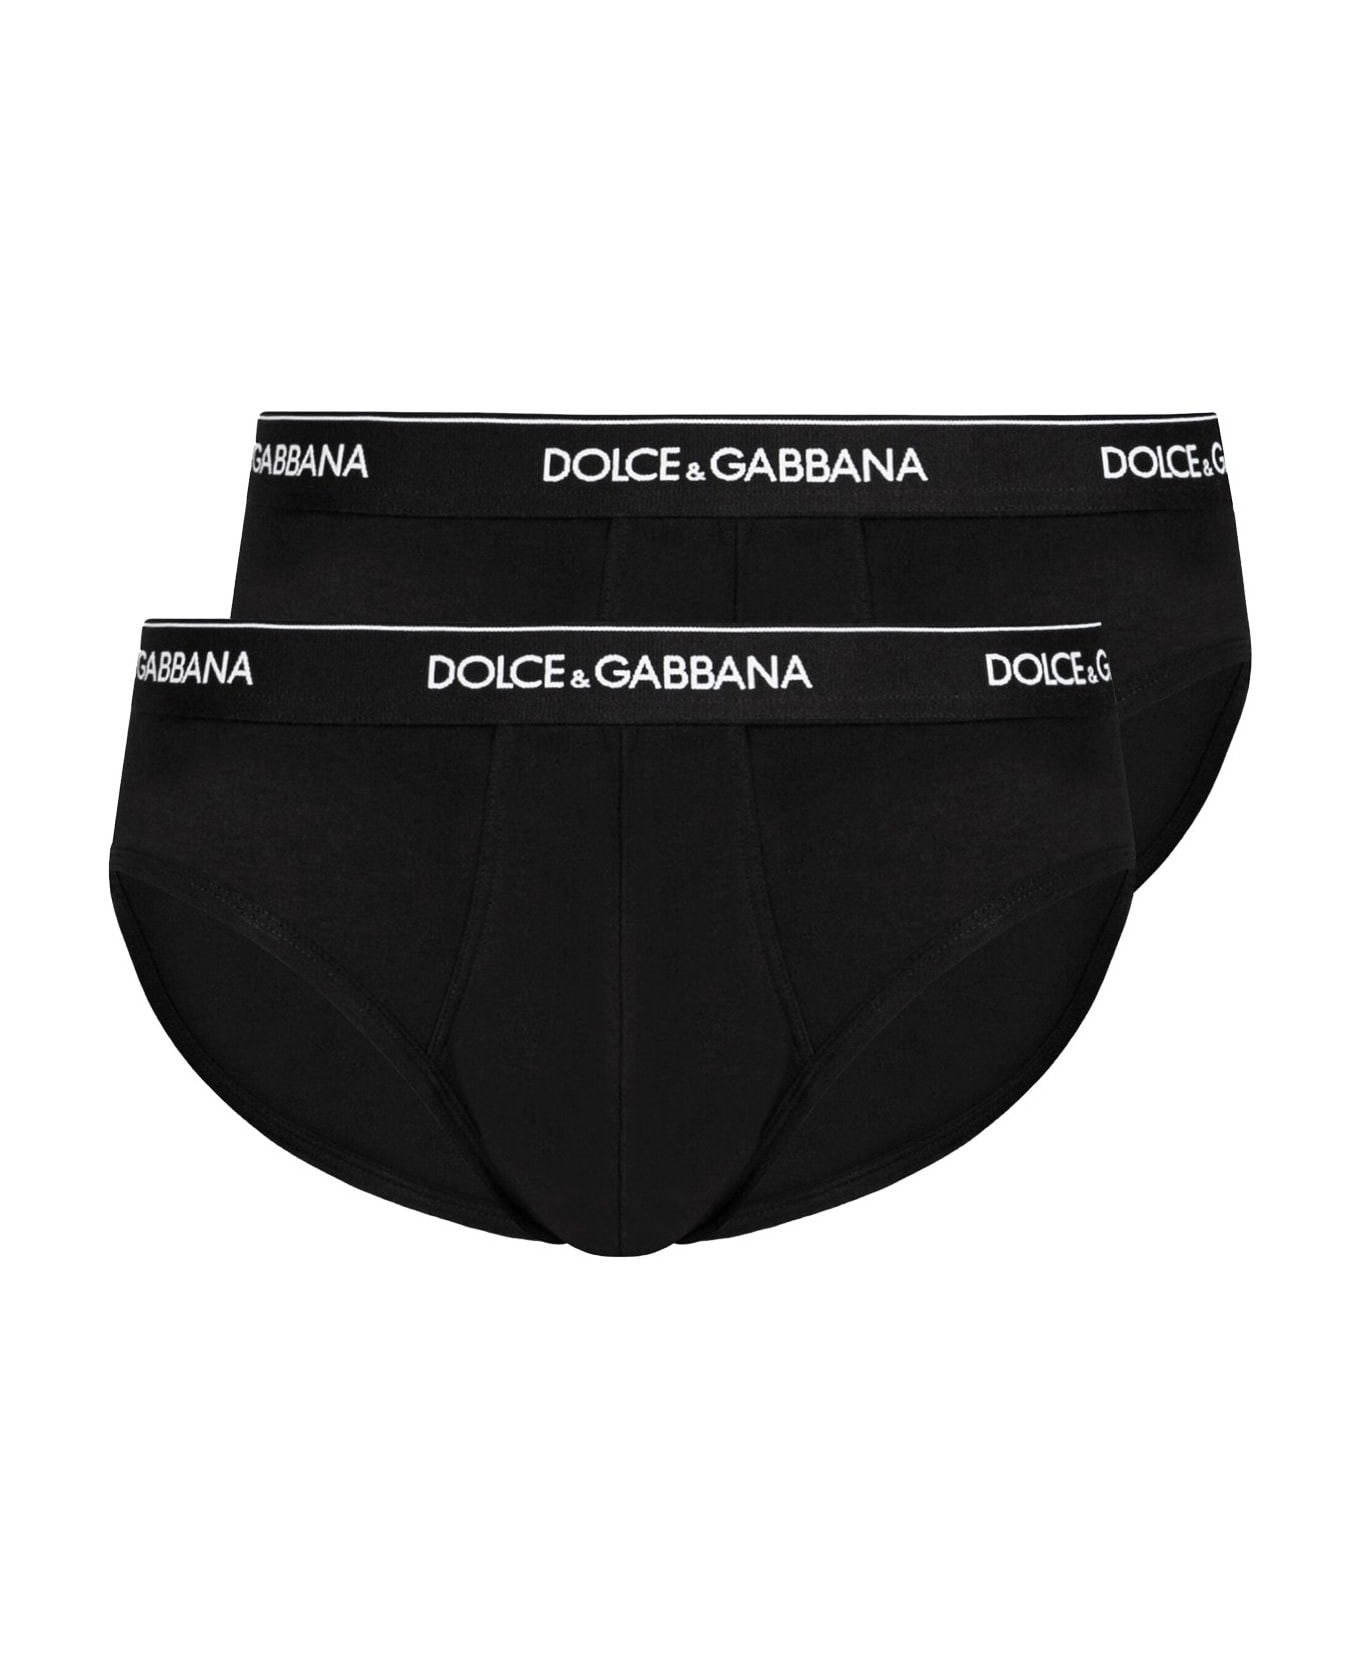 Dolce & Gabbana Pack Containing Two Brando Briefs - NERO